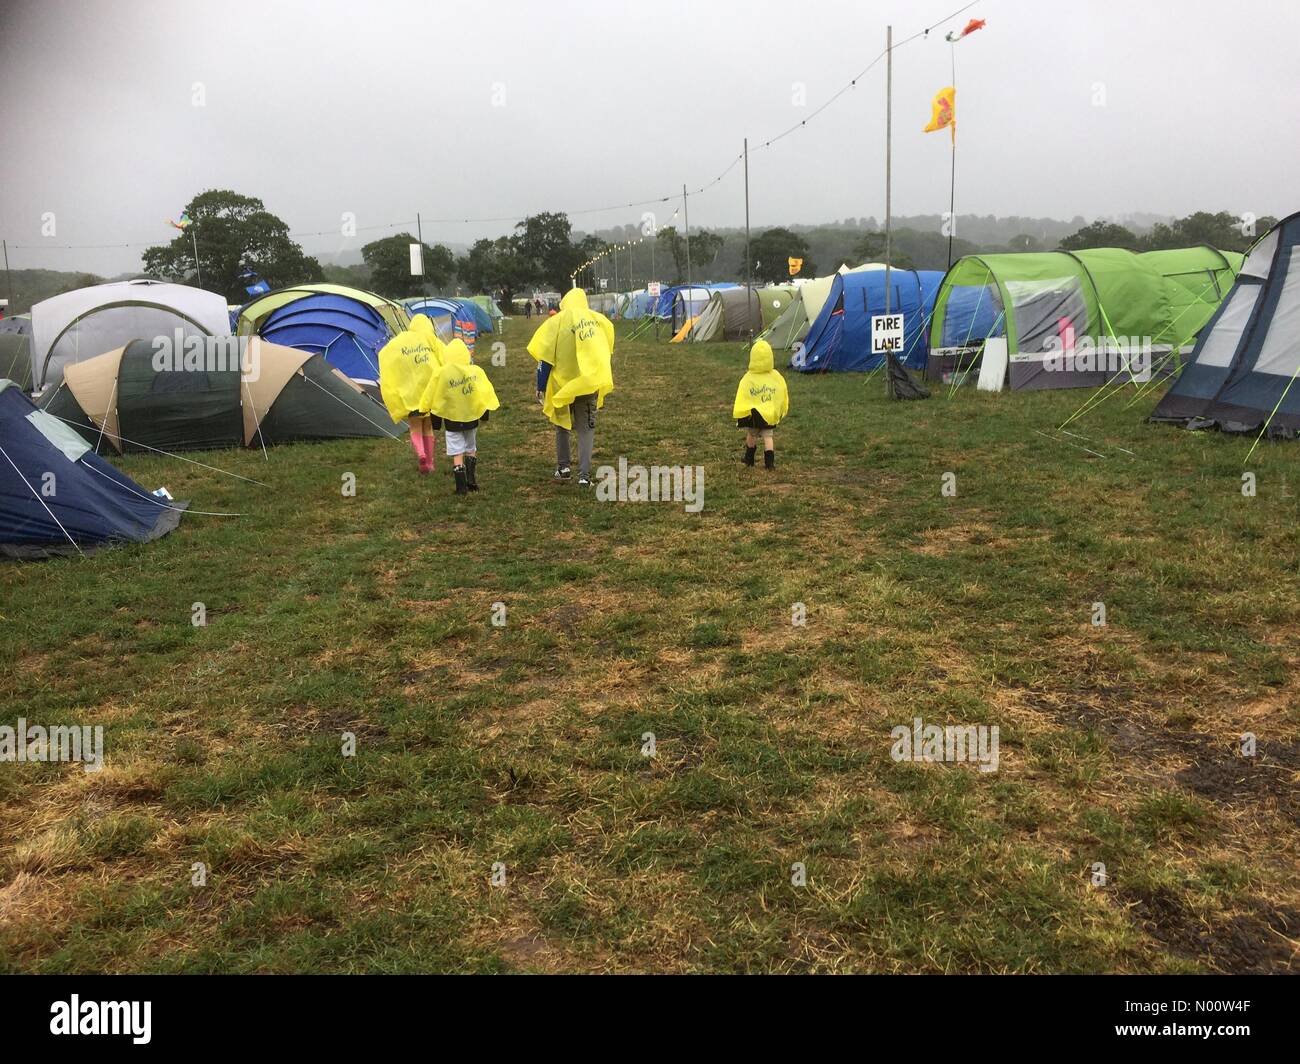 Tattenhall, Chester, Reino Unido. El 29 de julio, 2018. Campistas valiente bajo la lluvia en el norte de crédito: PennPix CarFest/Matt Pennington/StockimoNews/Alamy Live News Foto de stock